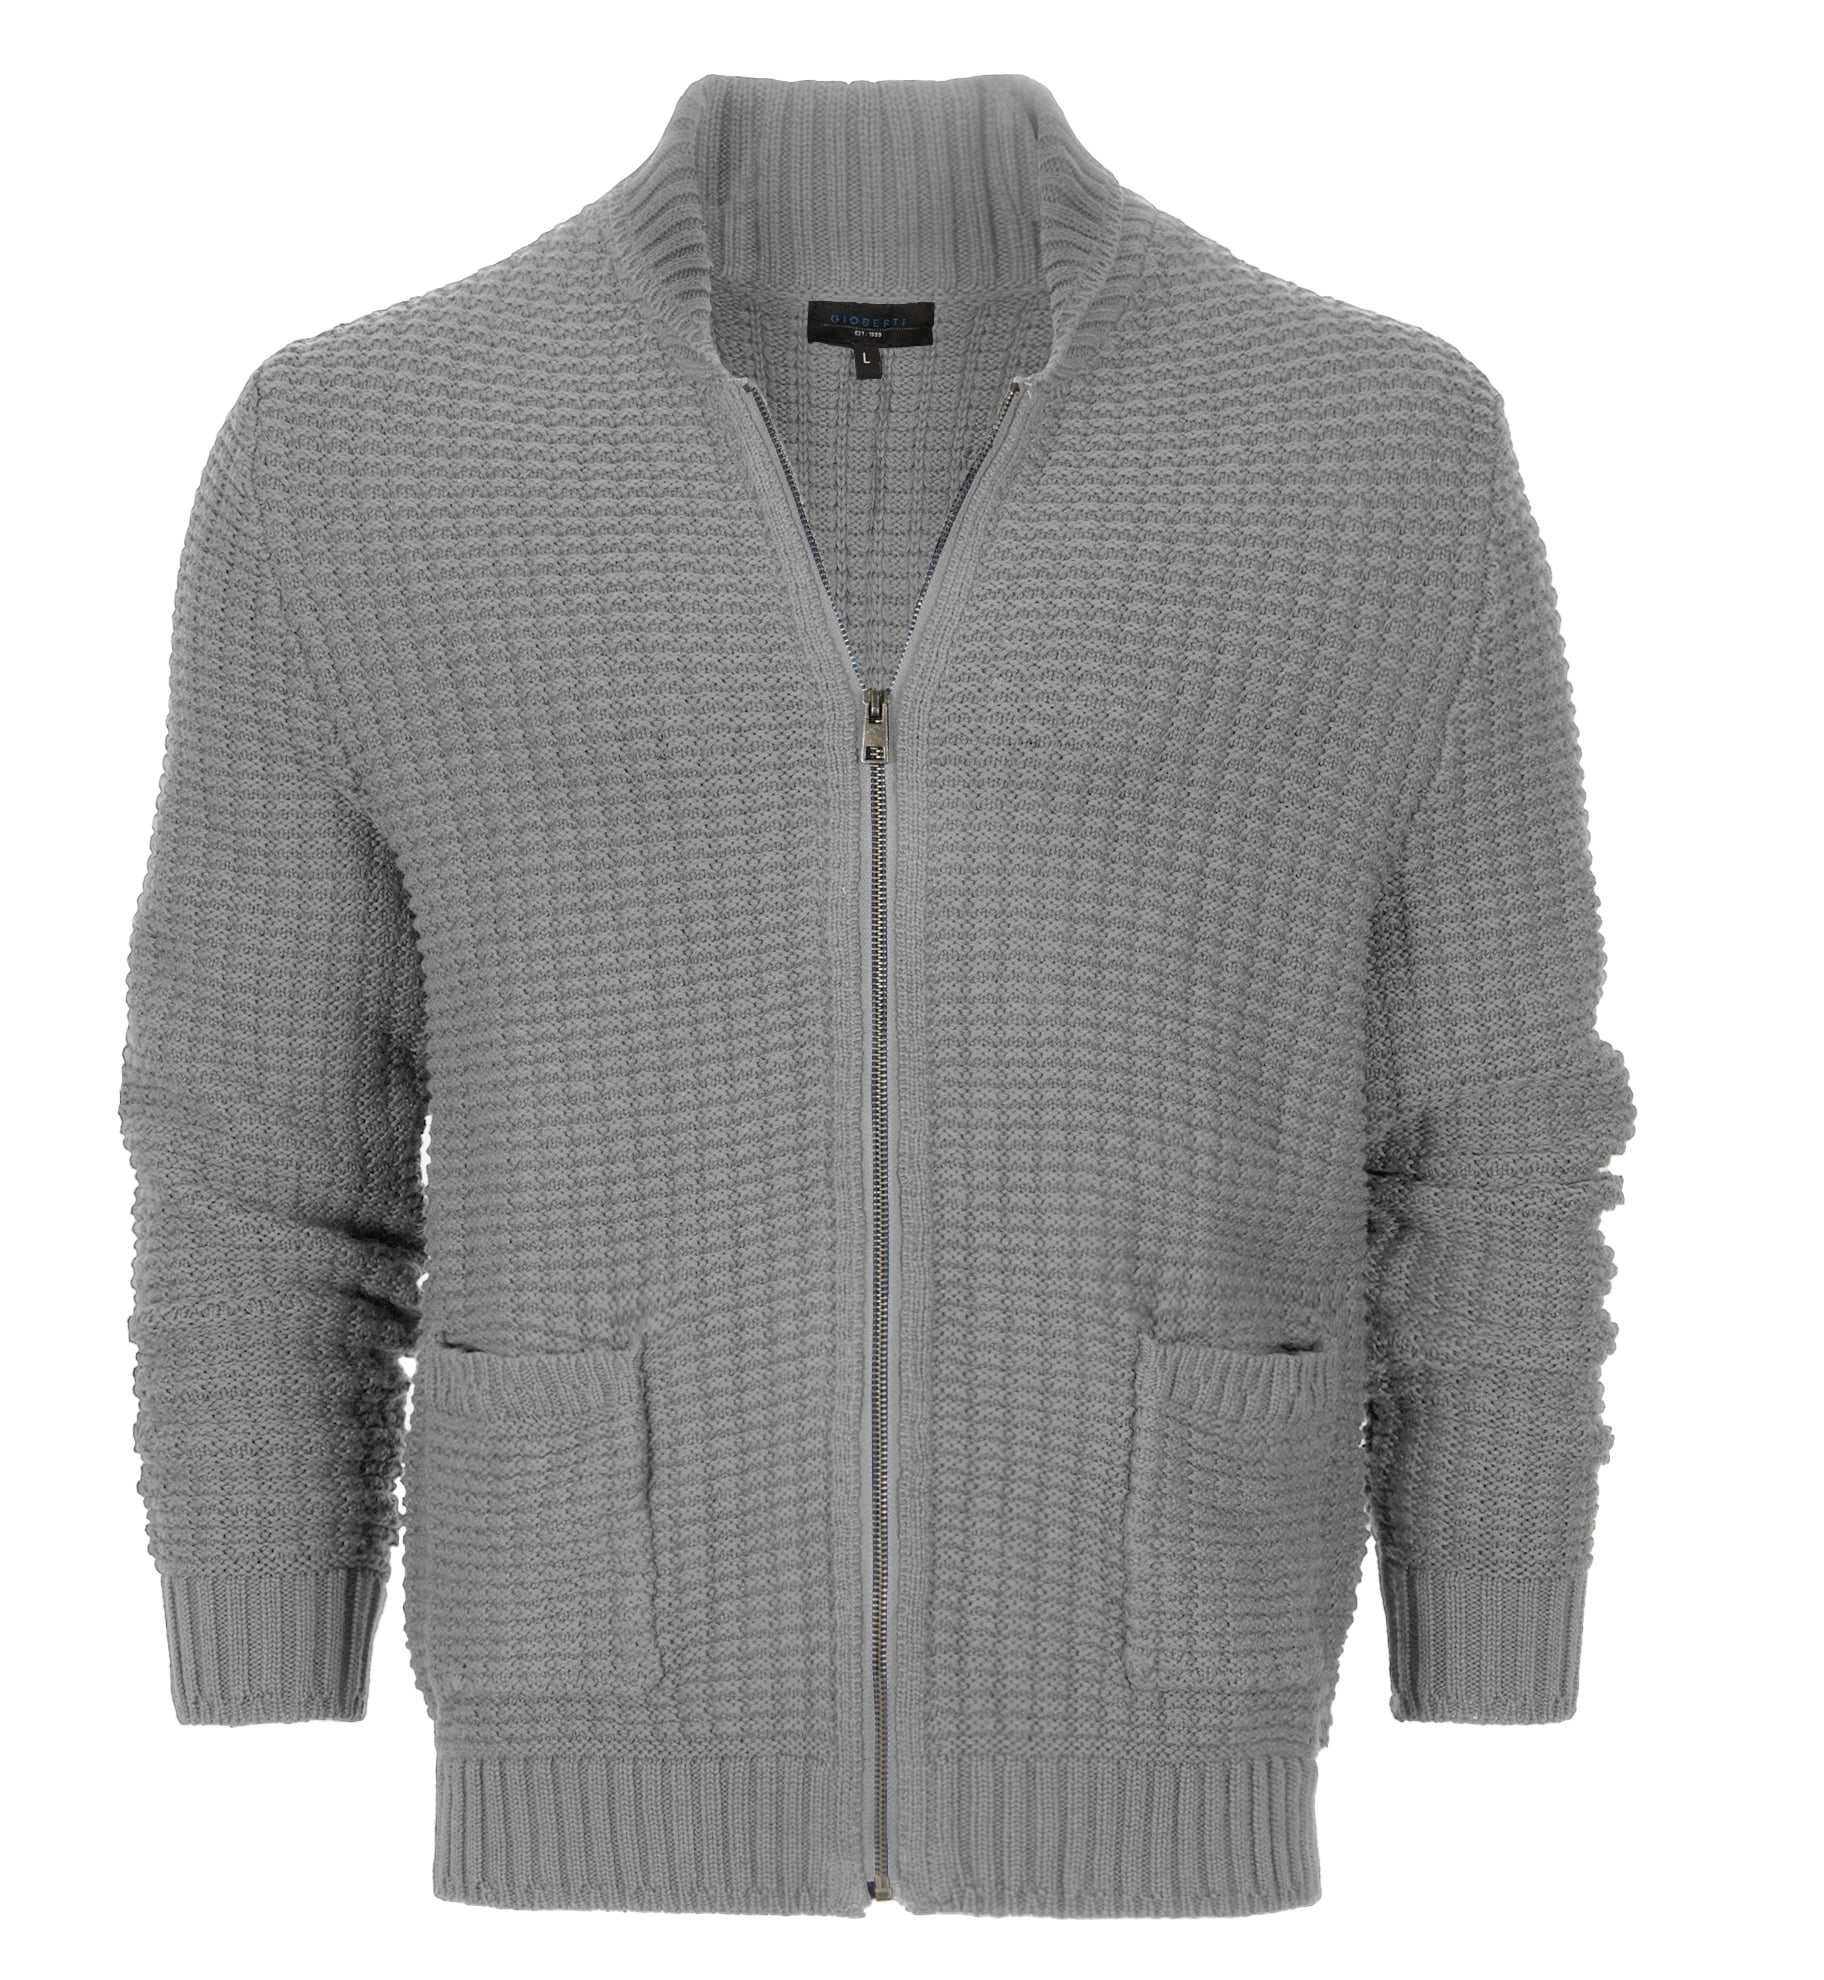 Gioberti Mens 100% Cotton Milano Knit Full-Zip Sweater - Walmart.com